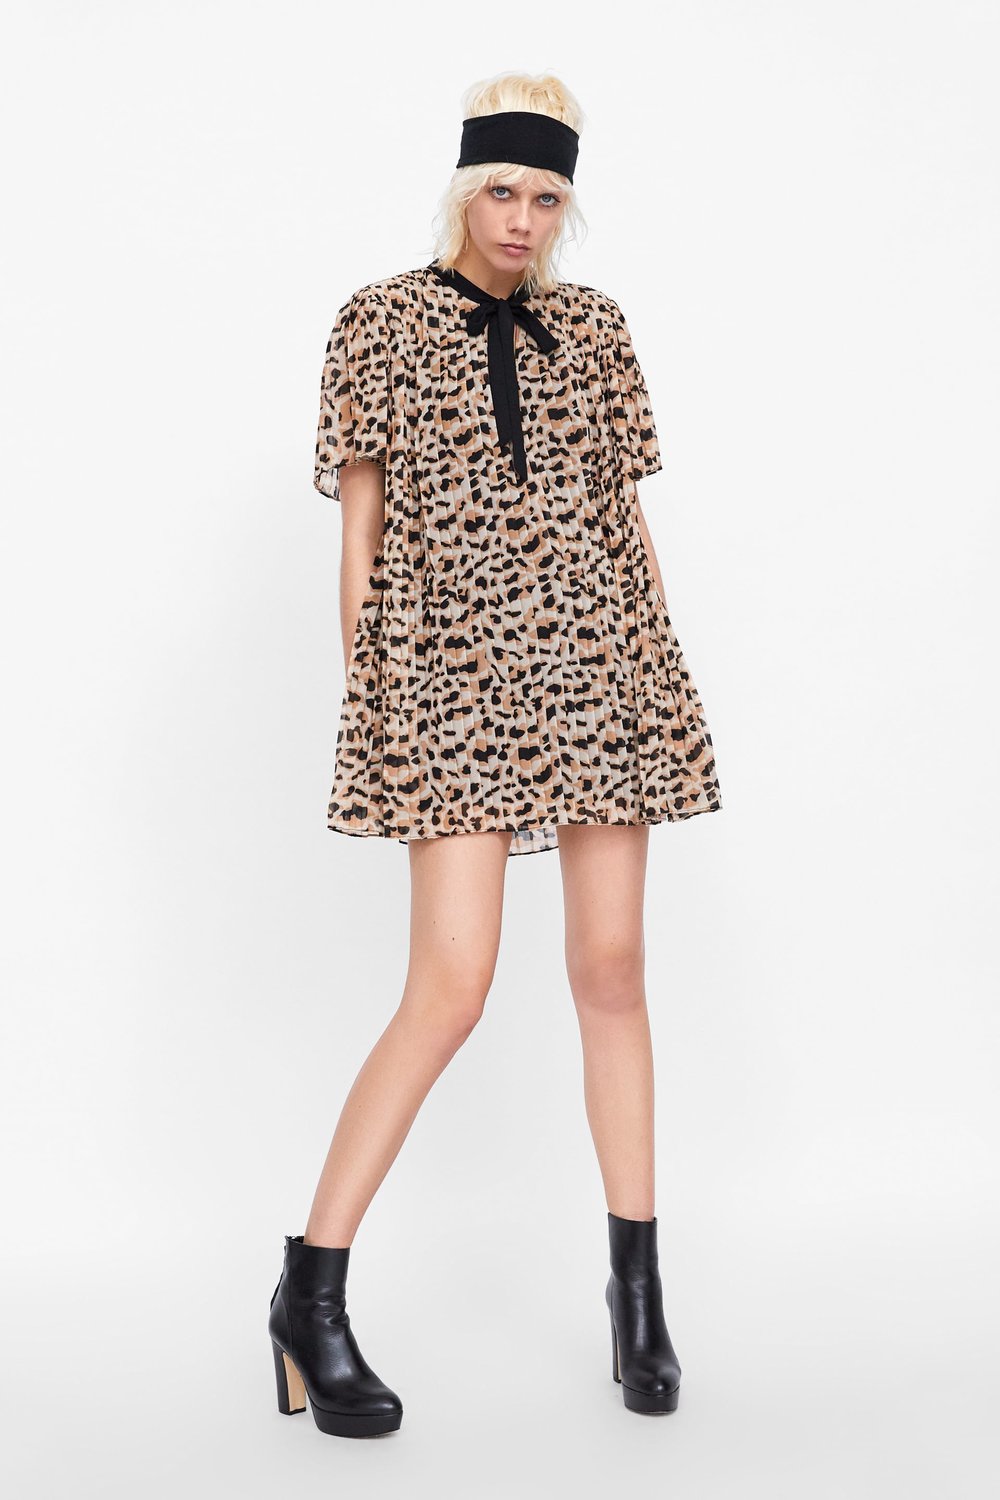 Zara: Animal Print Jumpsuit Dress